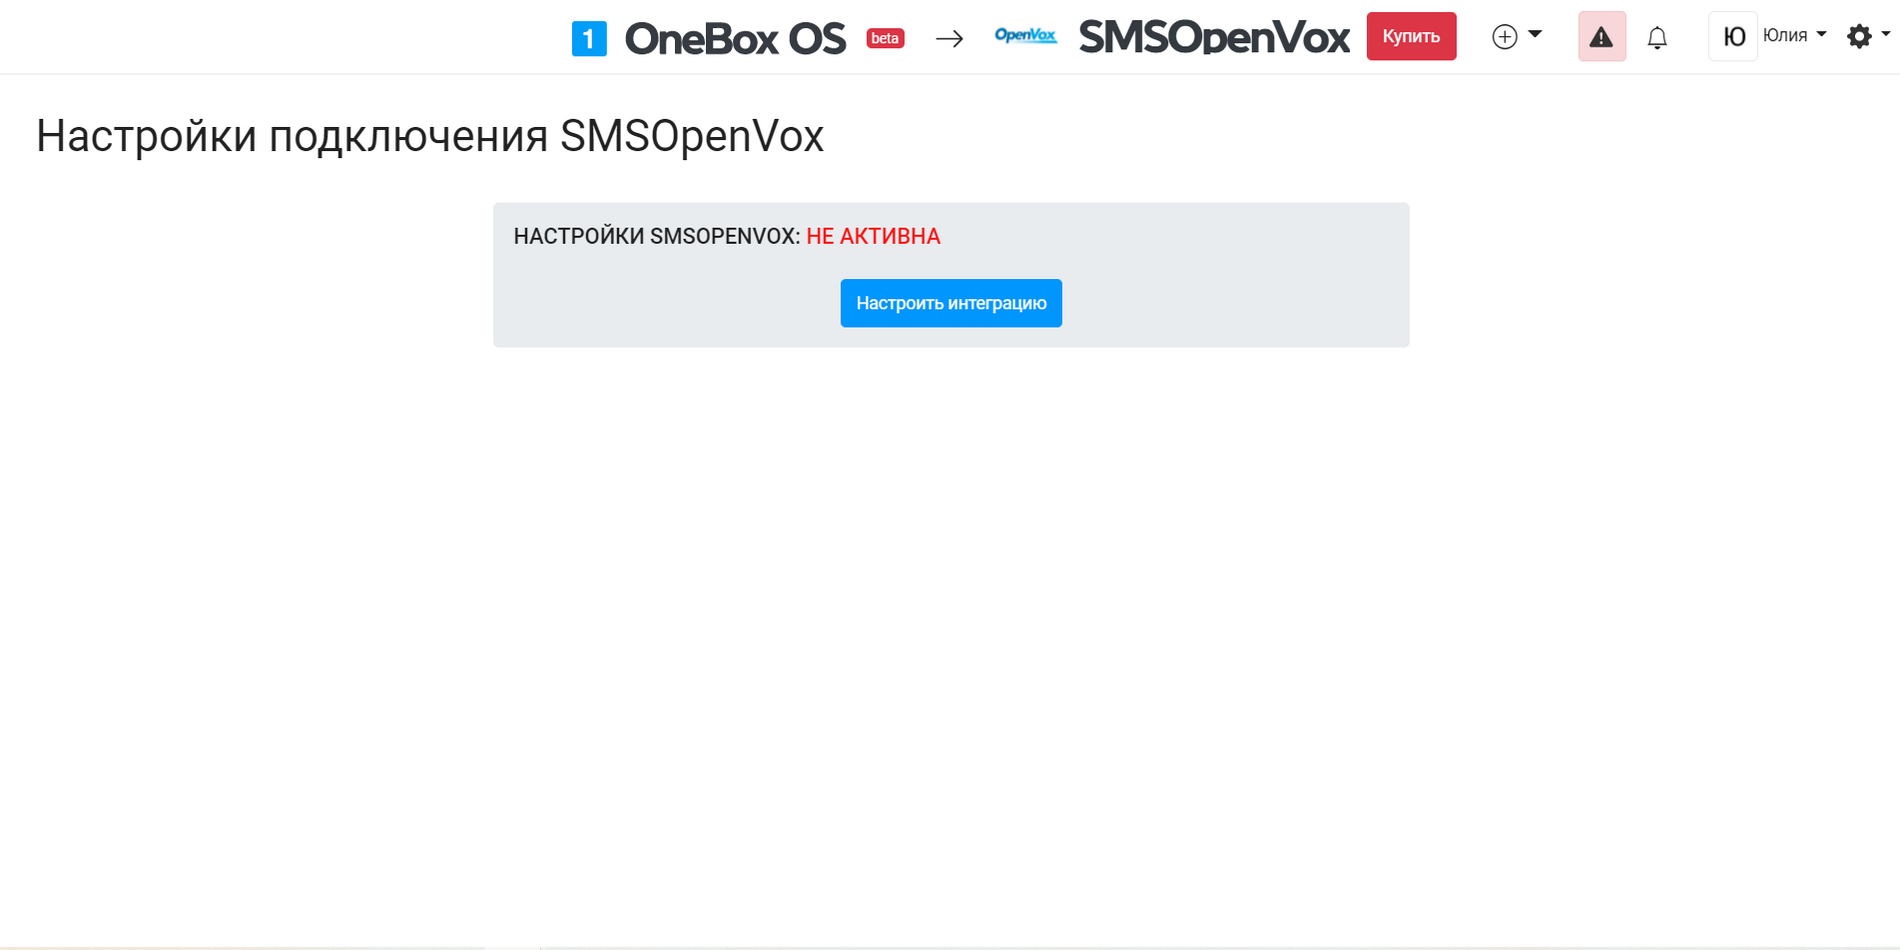 Application SMSOpenVox